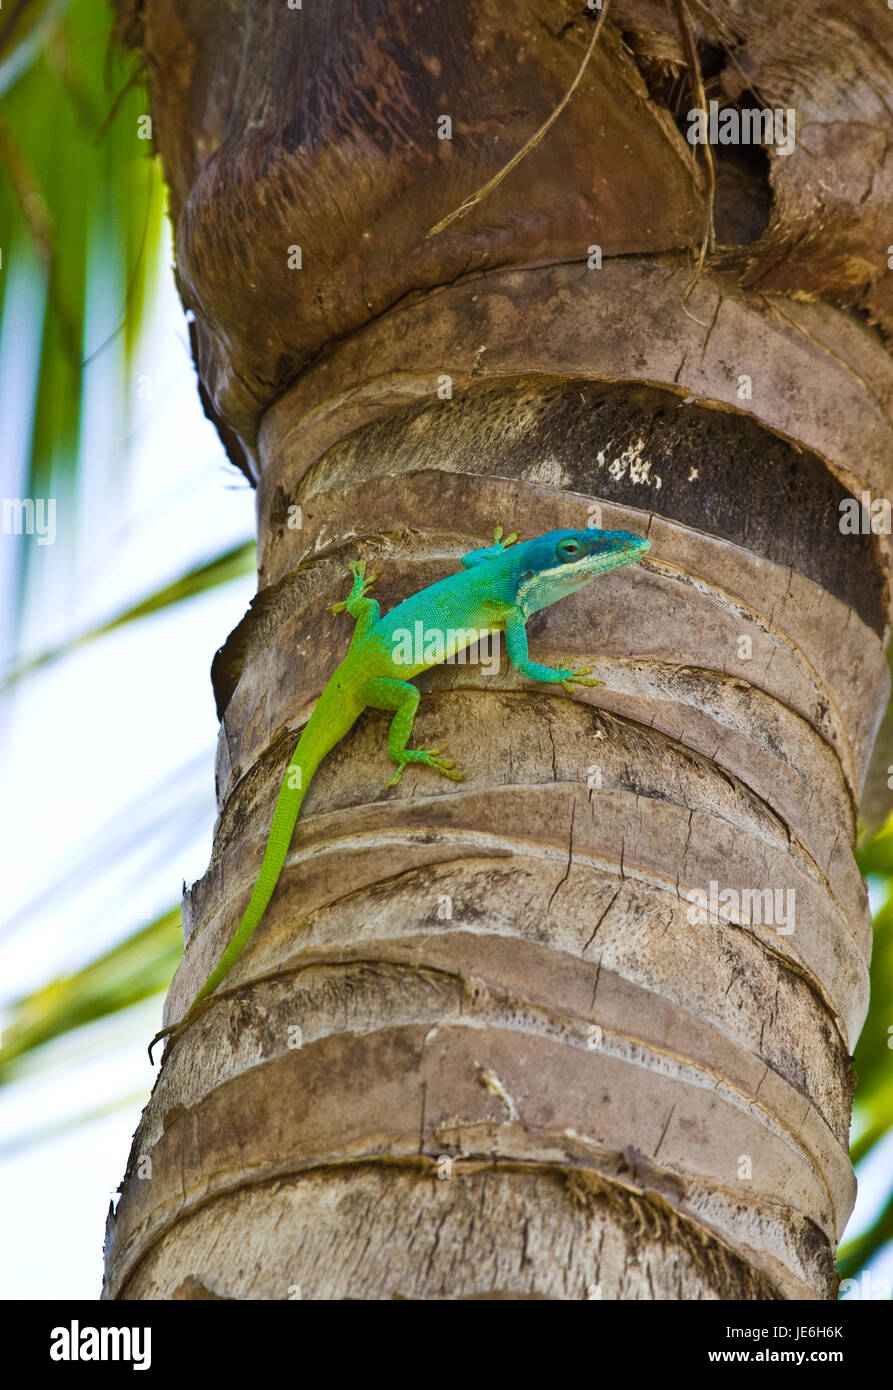 Lizard climbing a tree Stock Photo